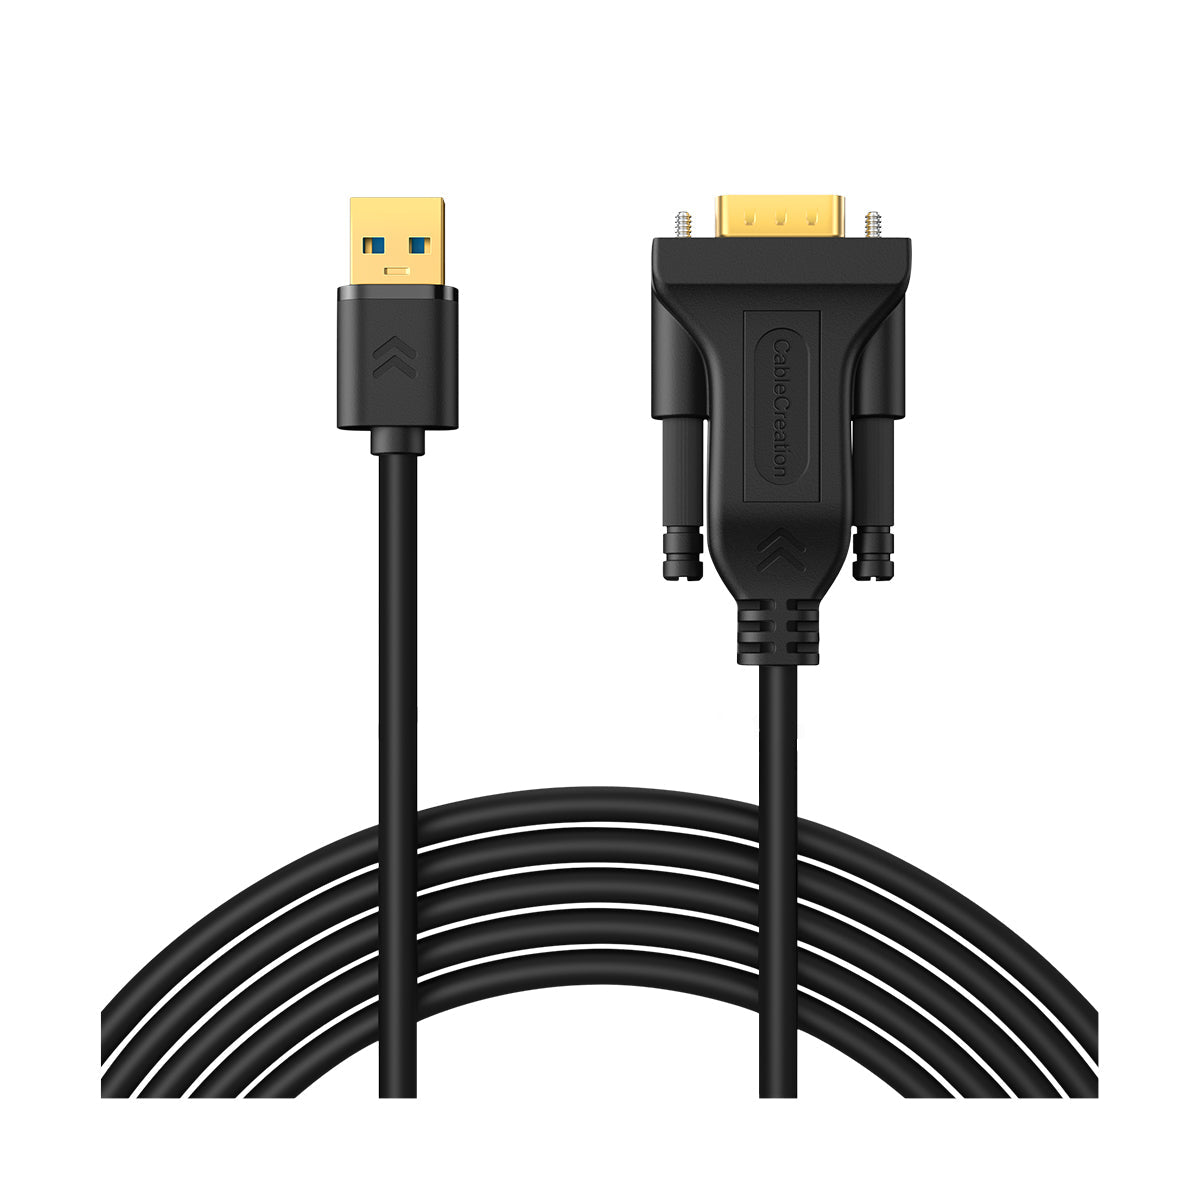 USB 3.0 to VGA Cable 6 Feet